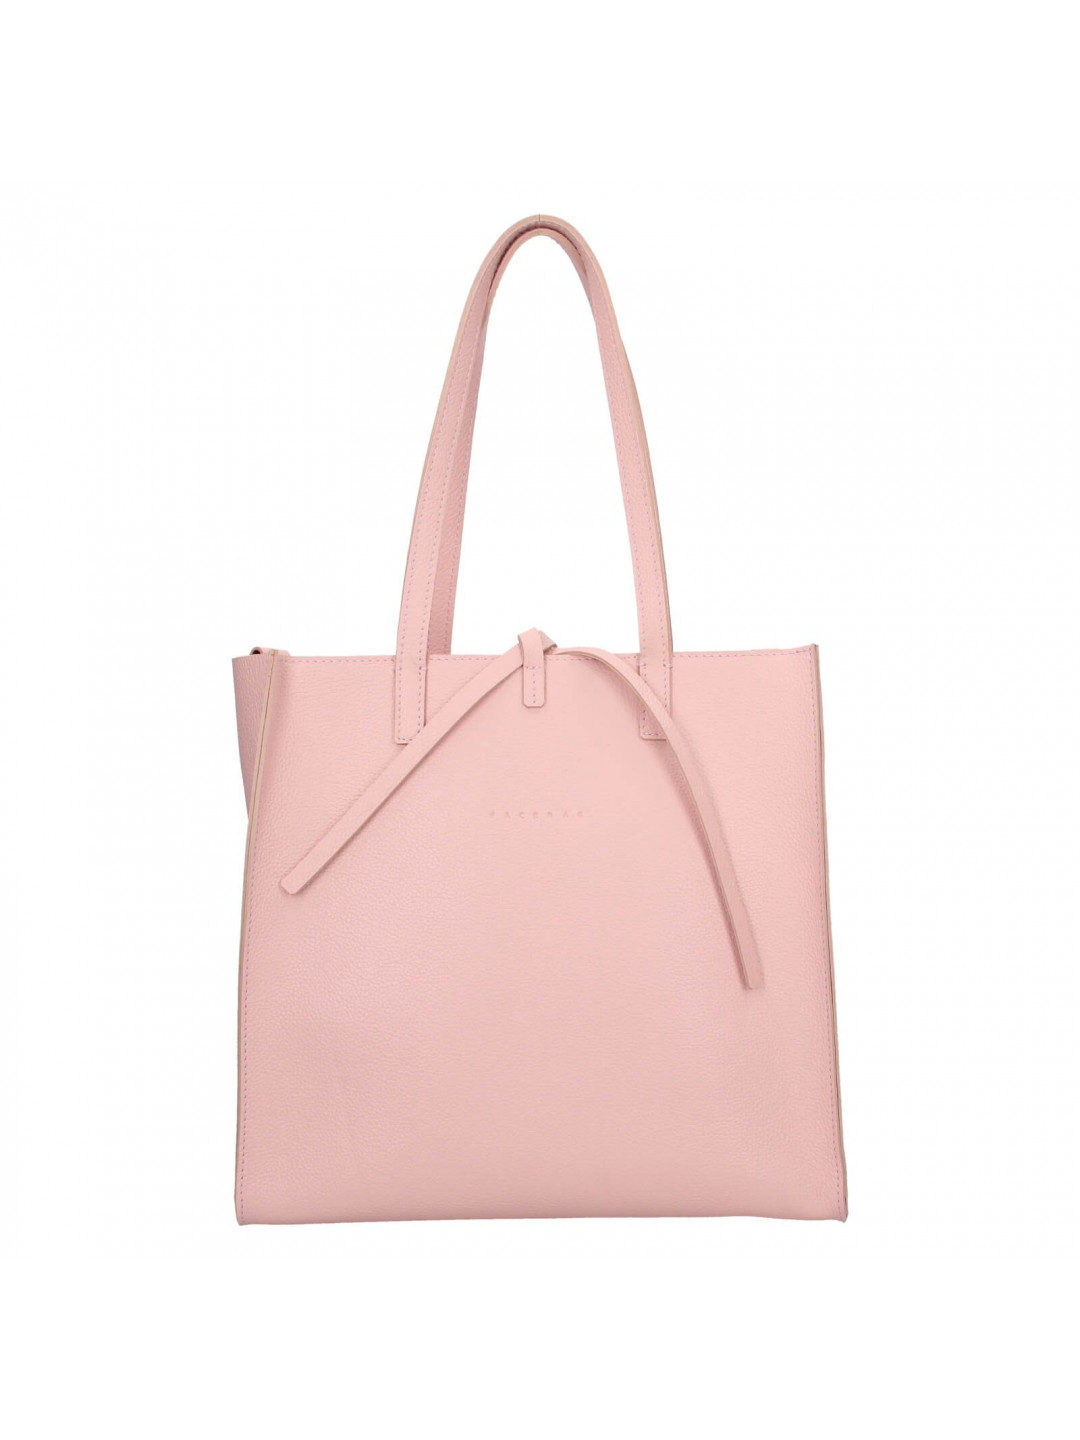 Dámská kožená 2v1 kabelka Facebag Liana – růžová